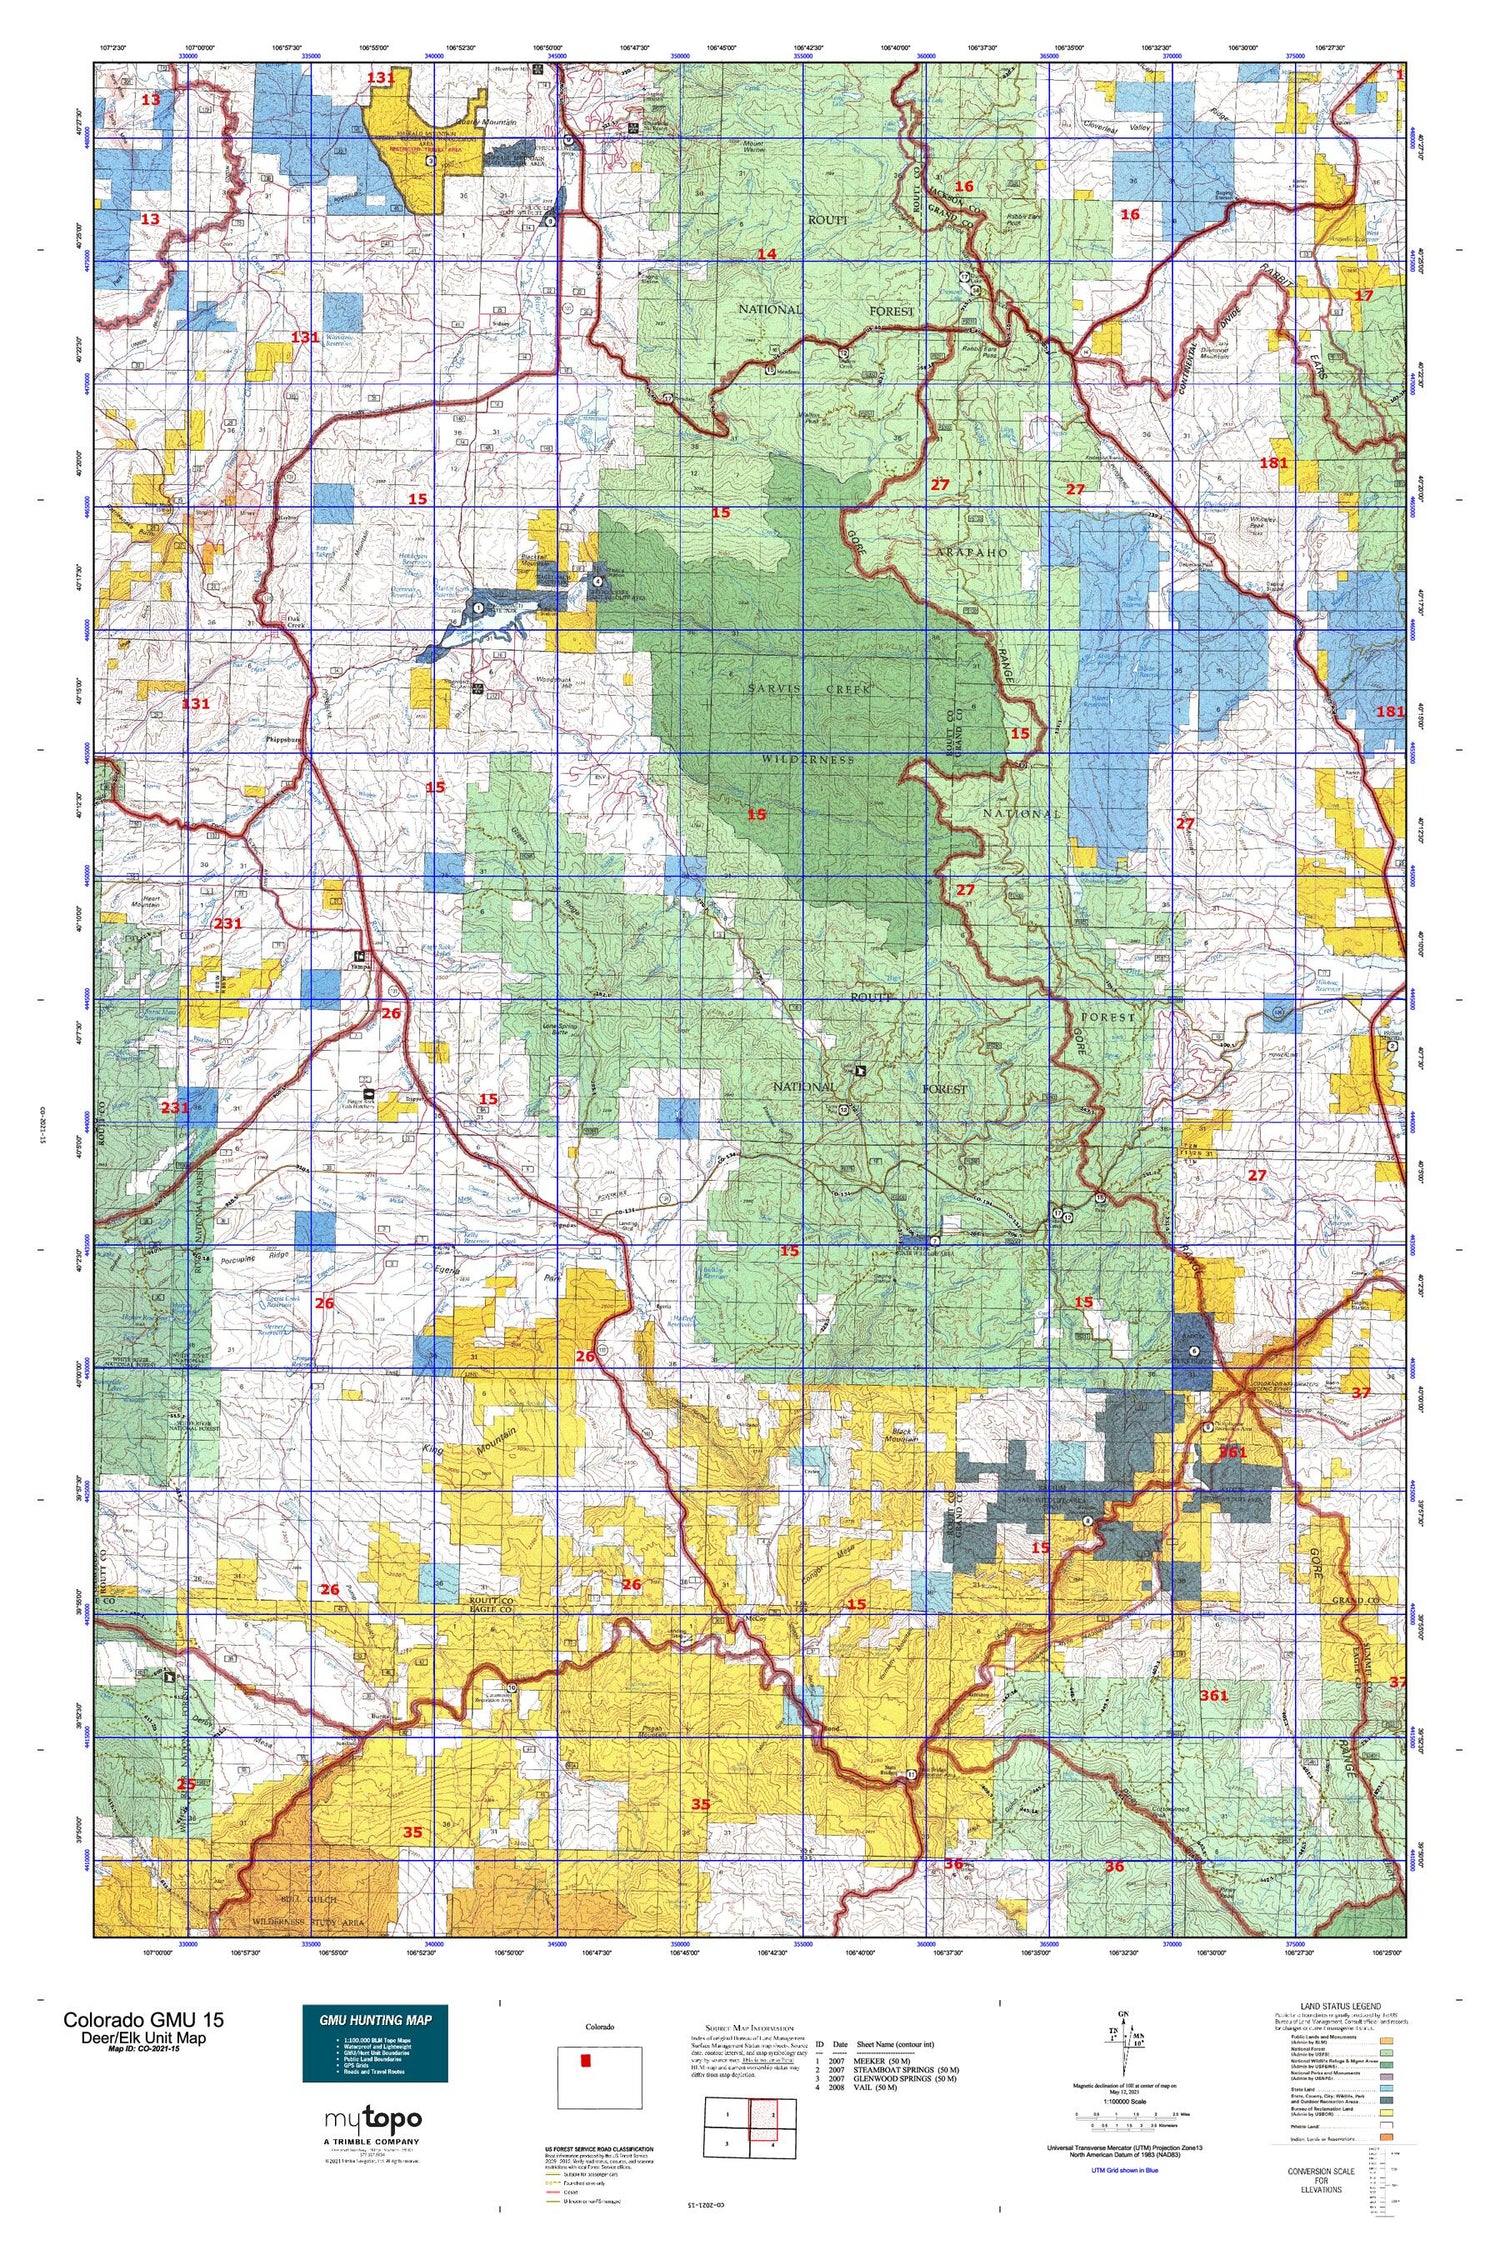 Colorado GMU 15 Map Image